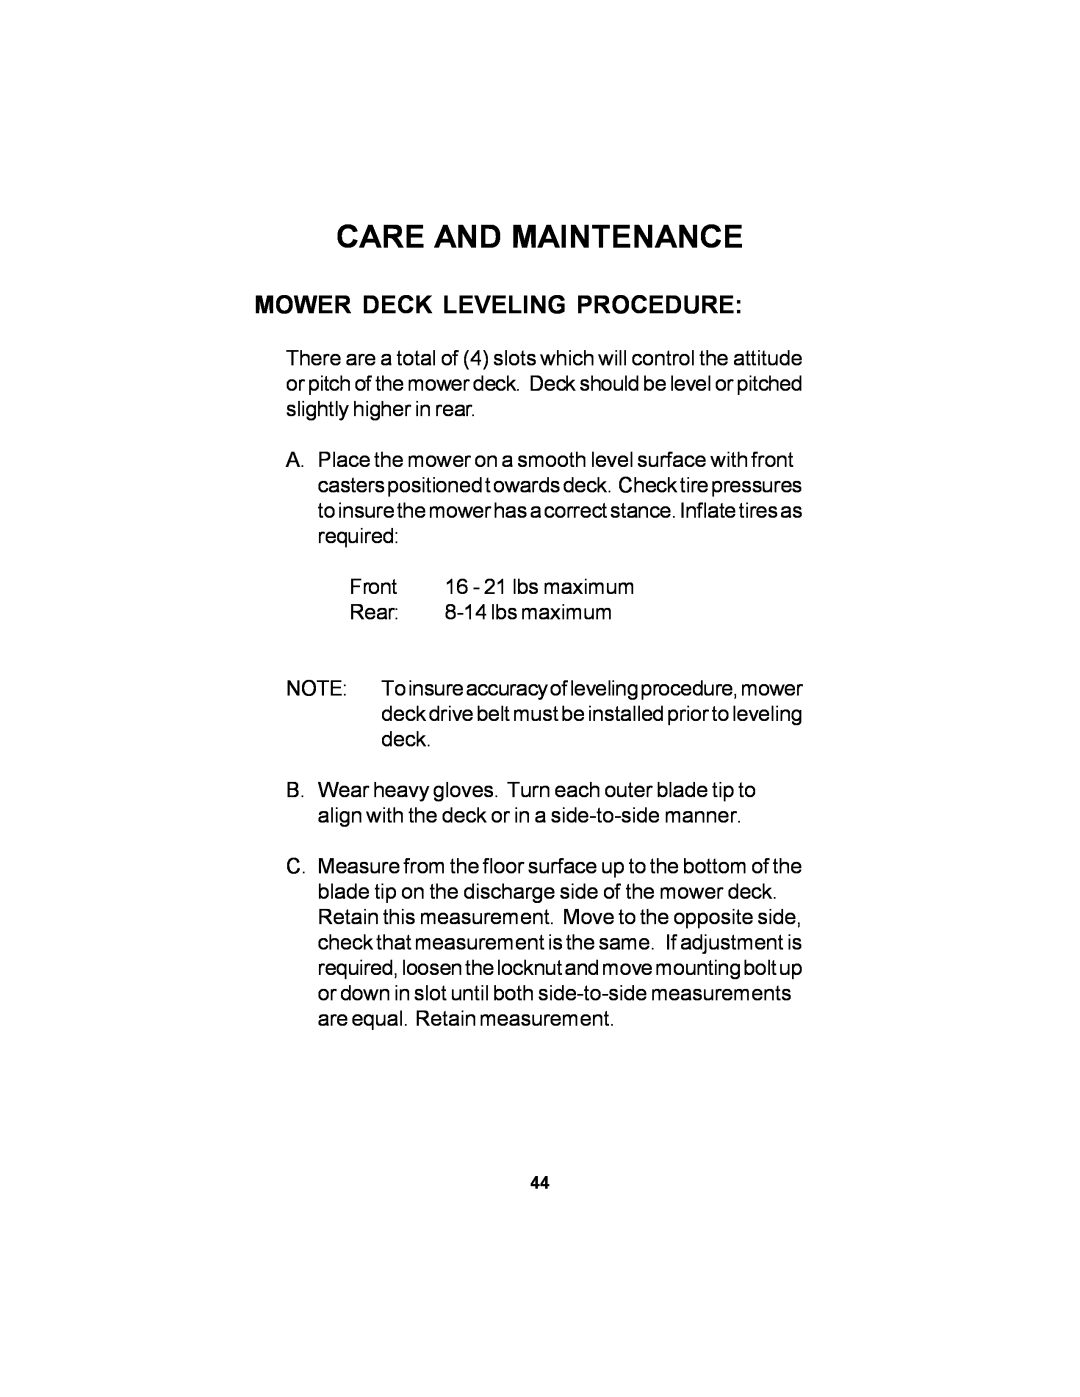 Dixon 11249-106 manual Mower Deck Leveling Procedure, Care And Maintenance 